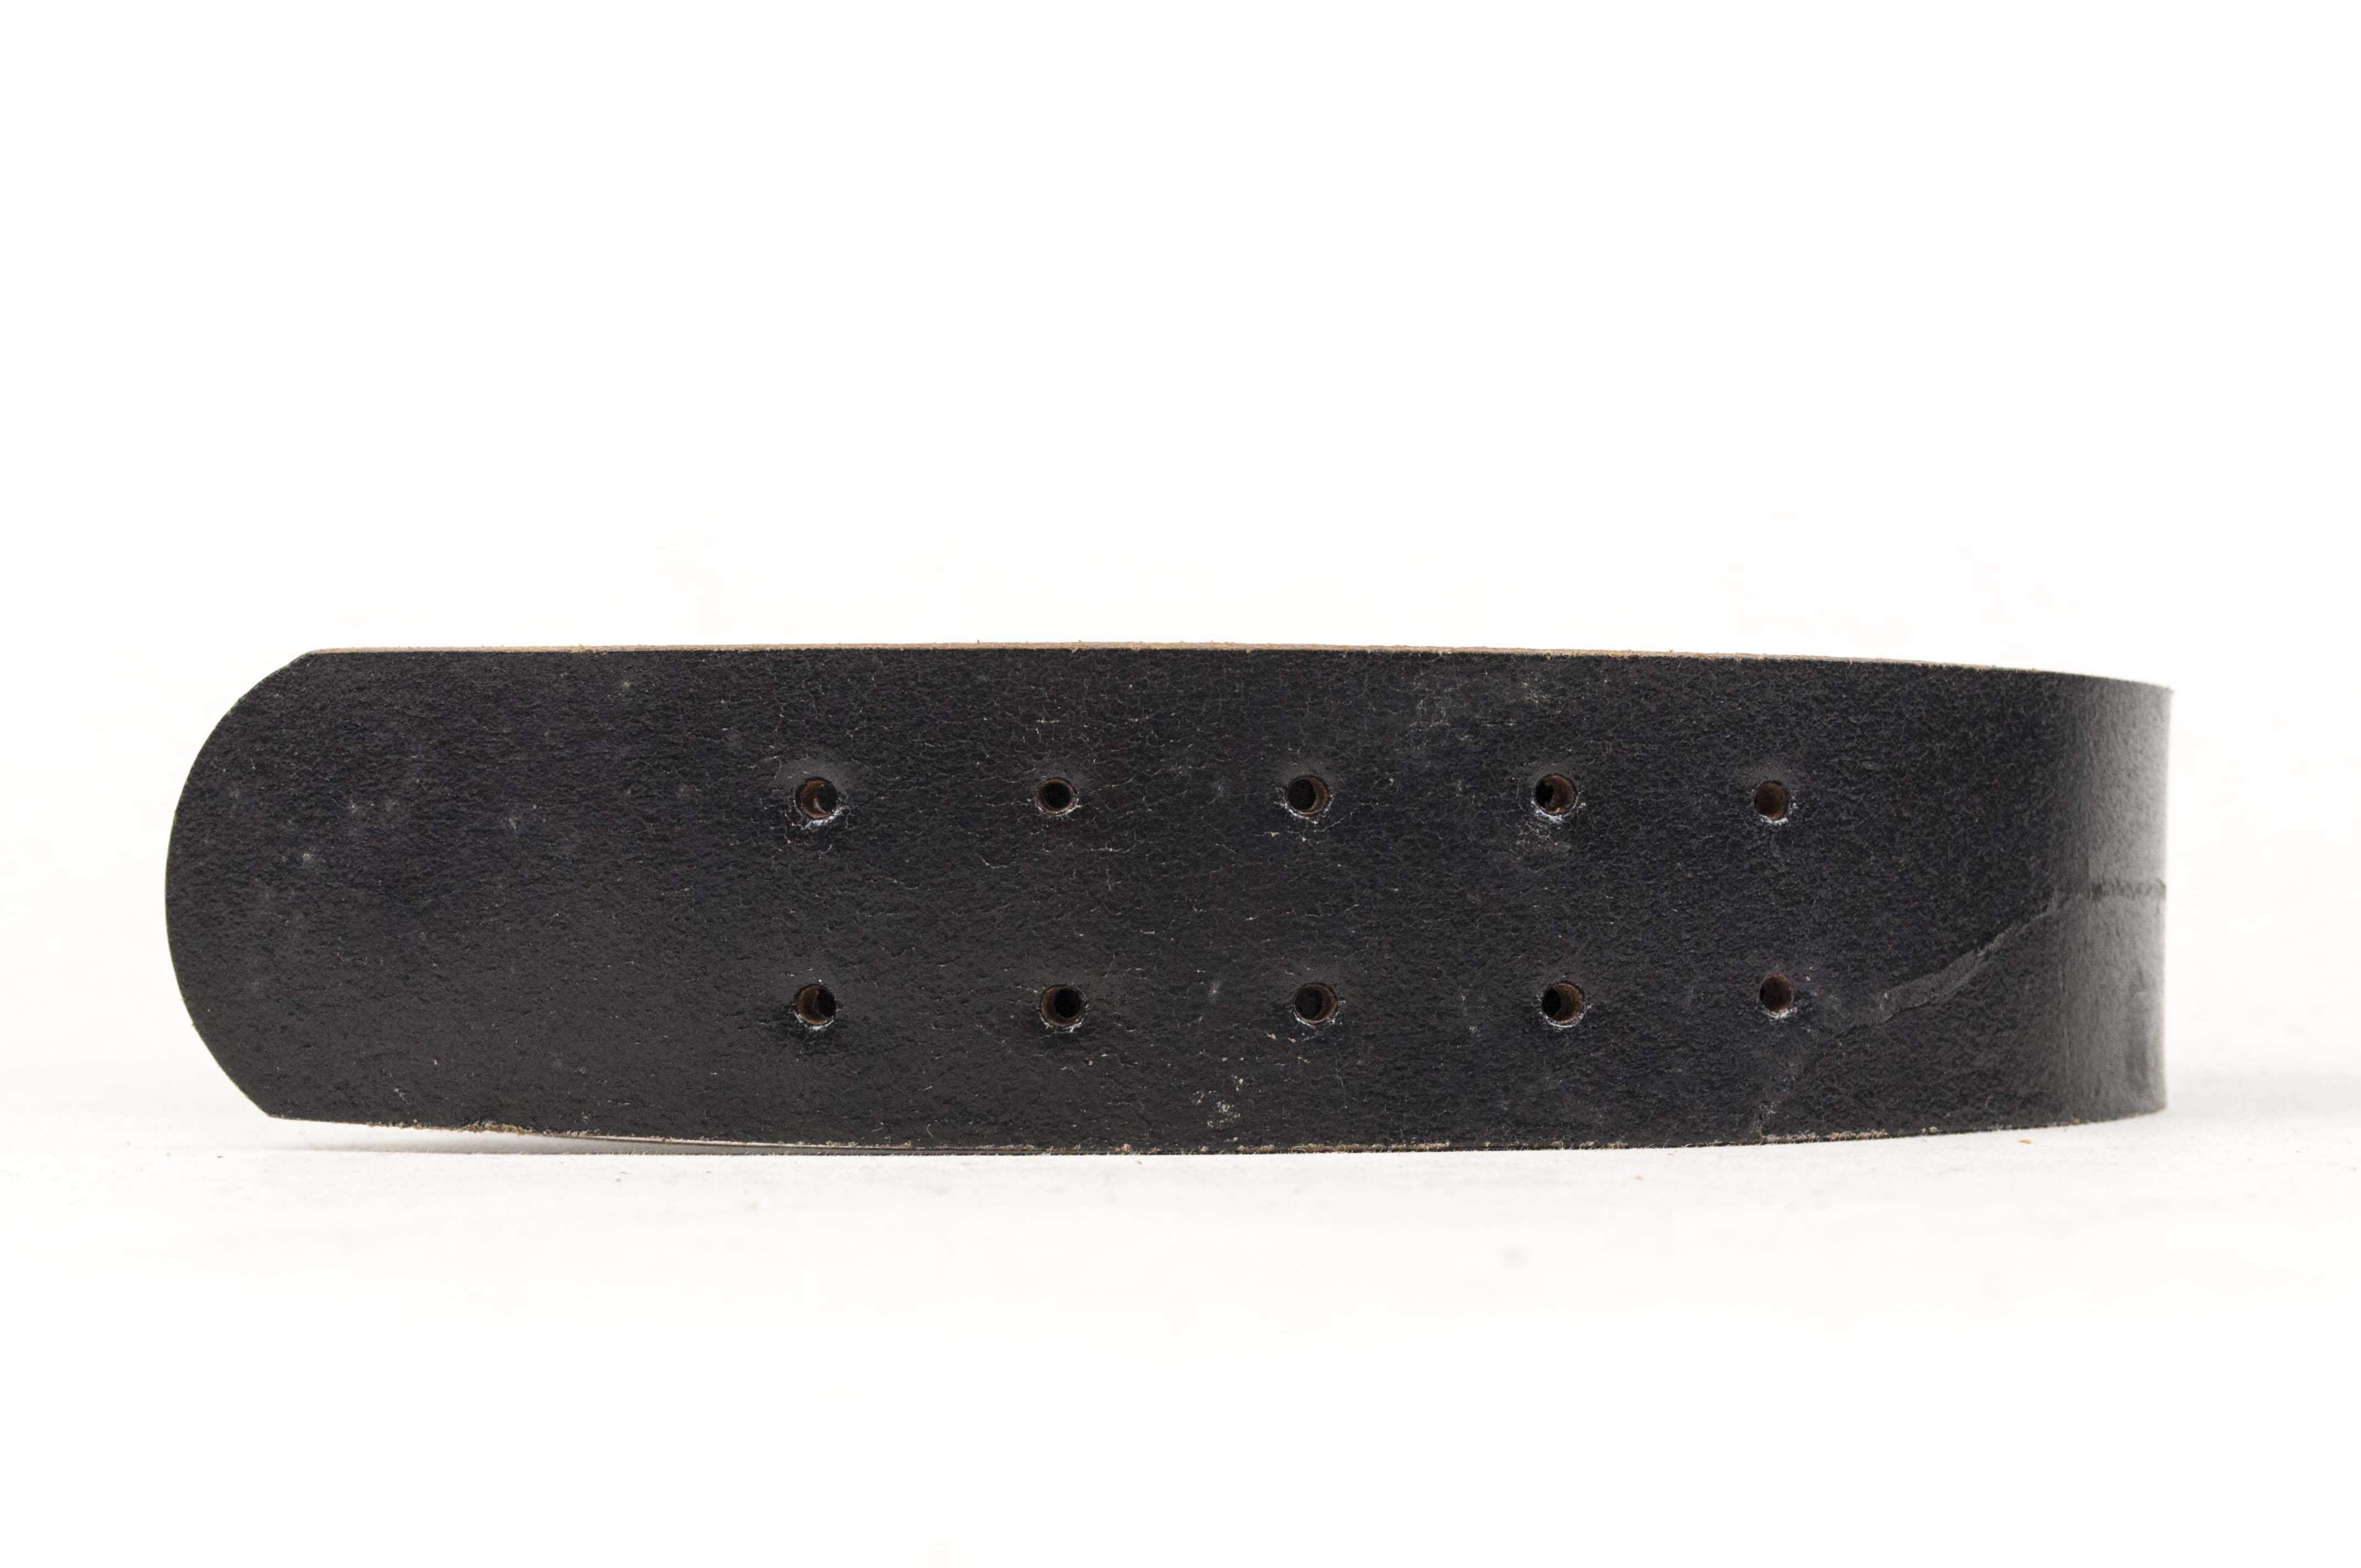 Equipment belt – RB-Nr. 0/0921/0008 – fjm44